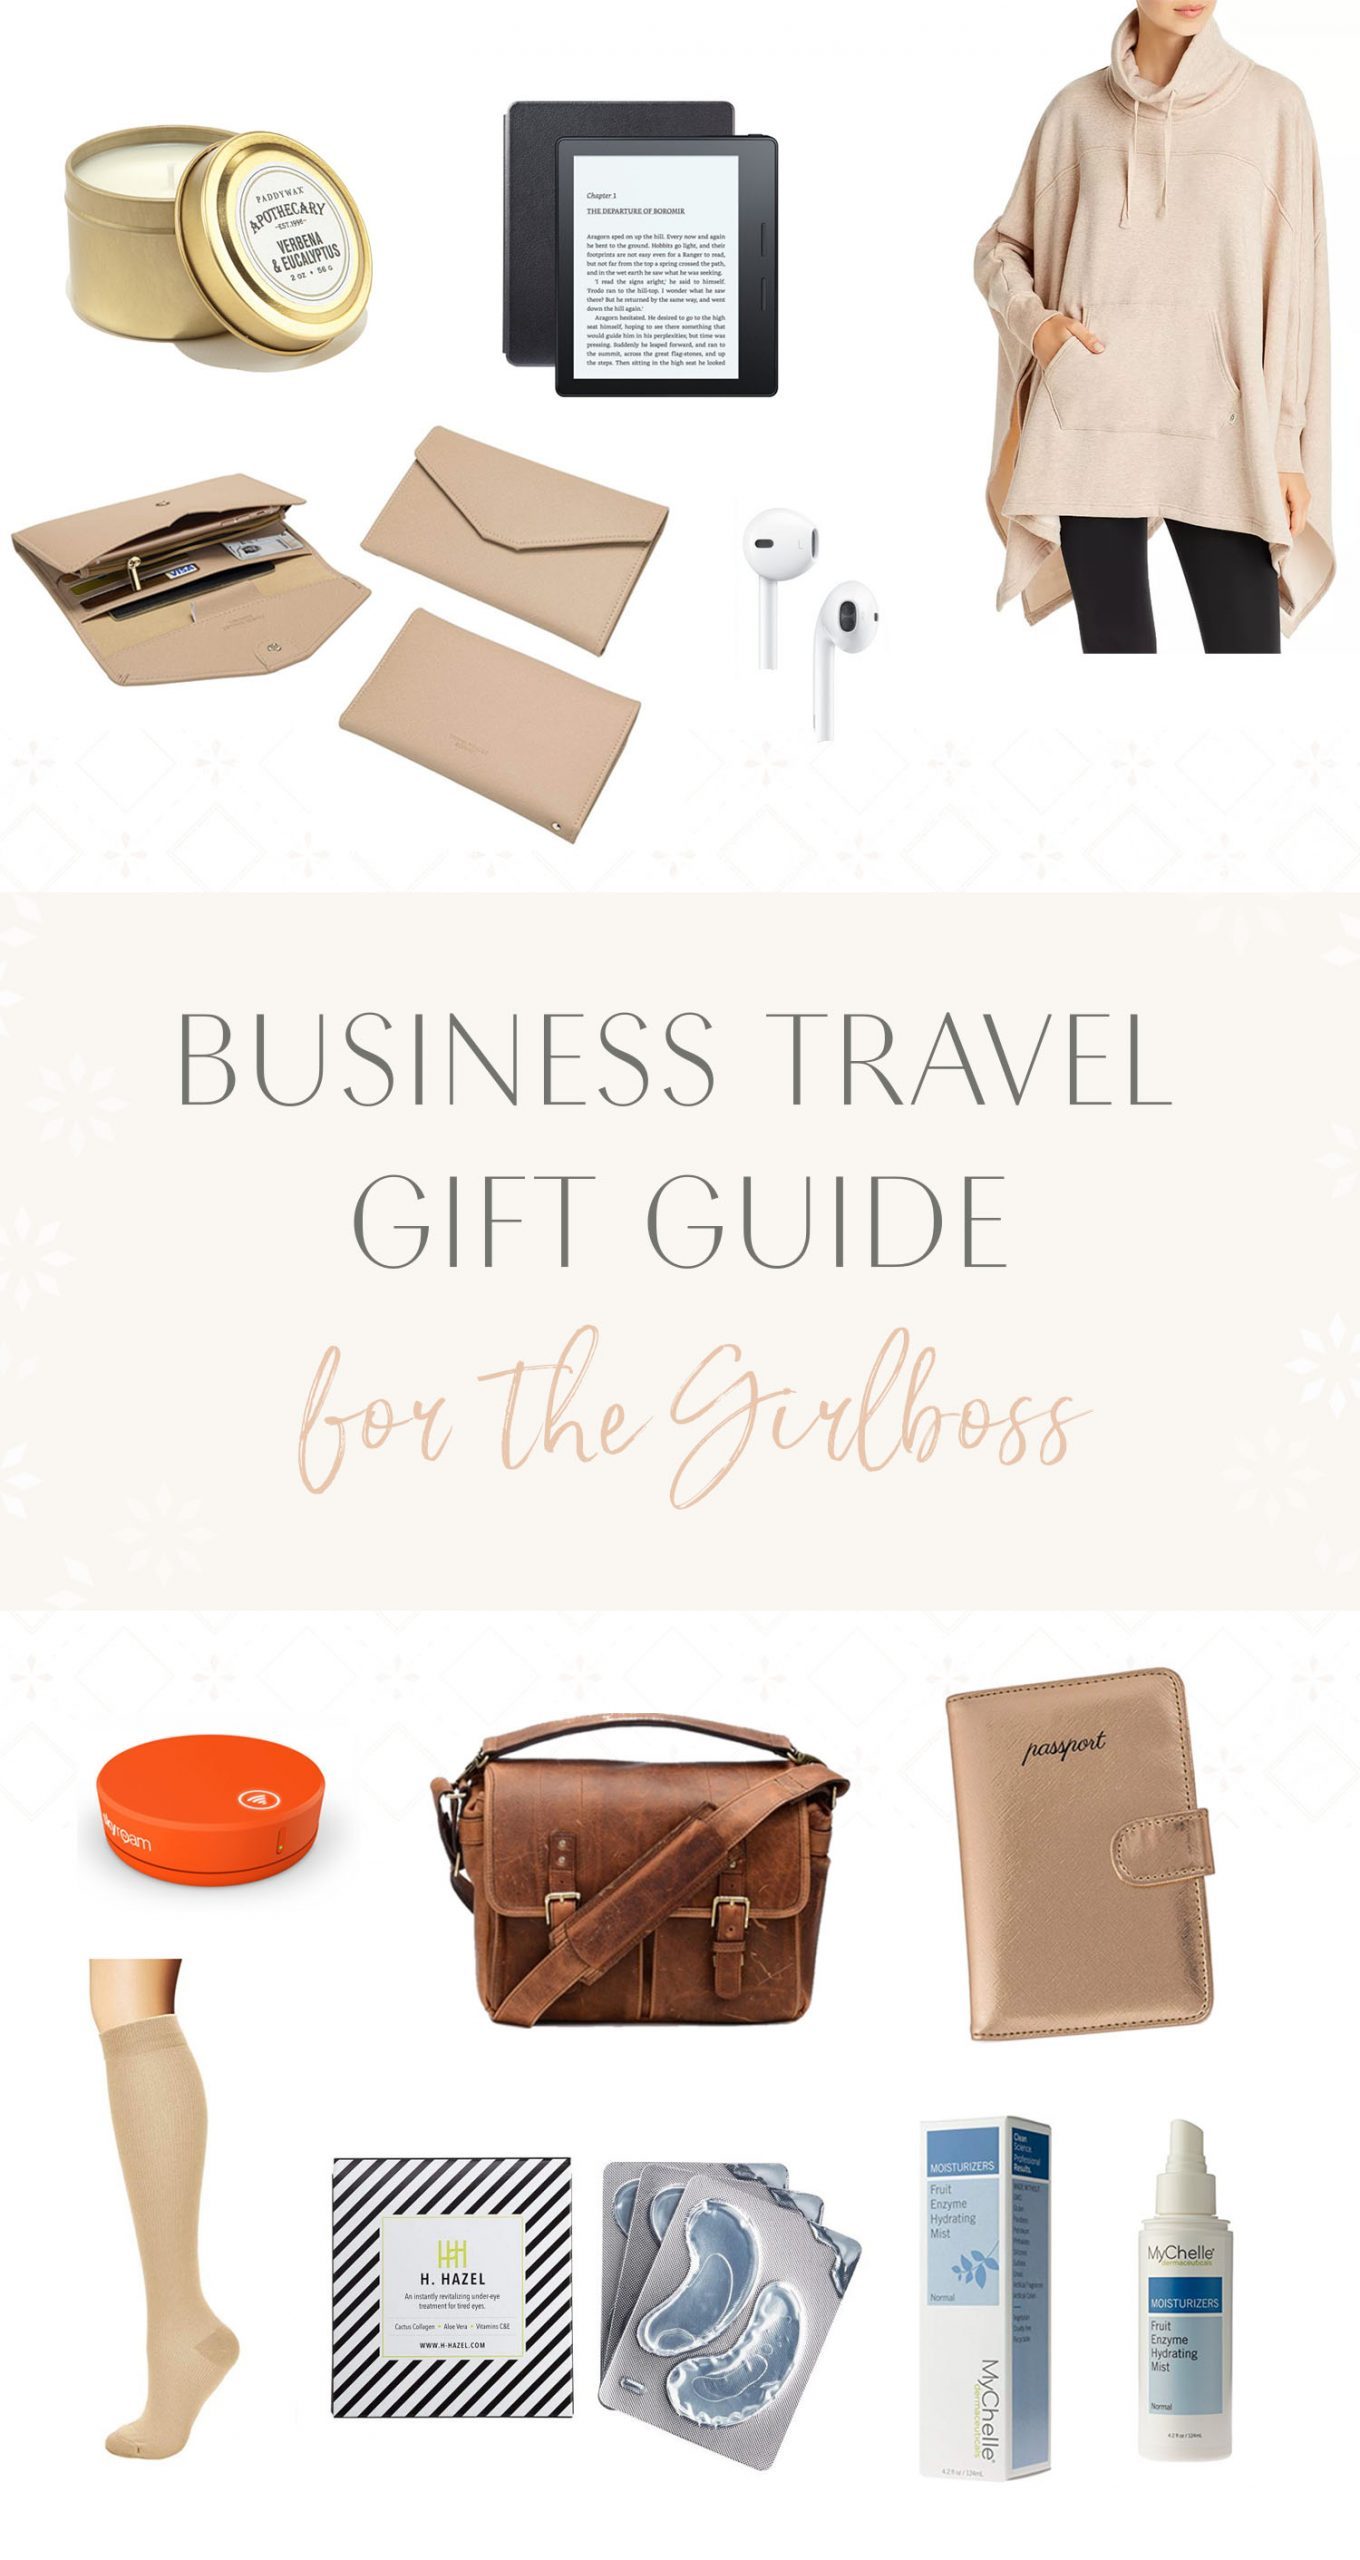 https://theblondeabroad.com/wp-content/uploads/2015/12/Business-Gift-Guide-Girlboss-1-scaled-e1605335349496.jpg